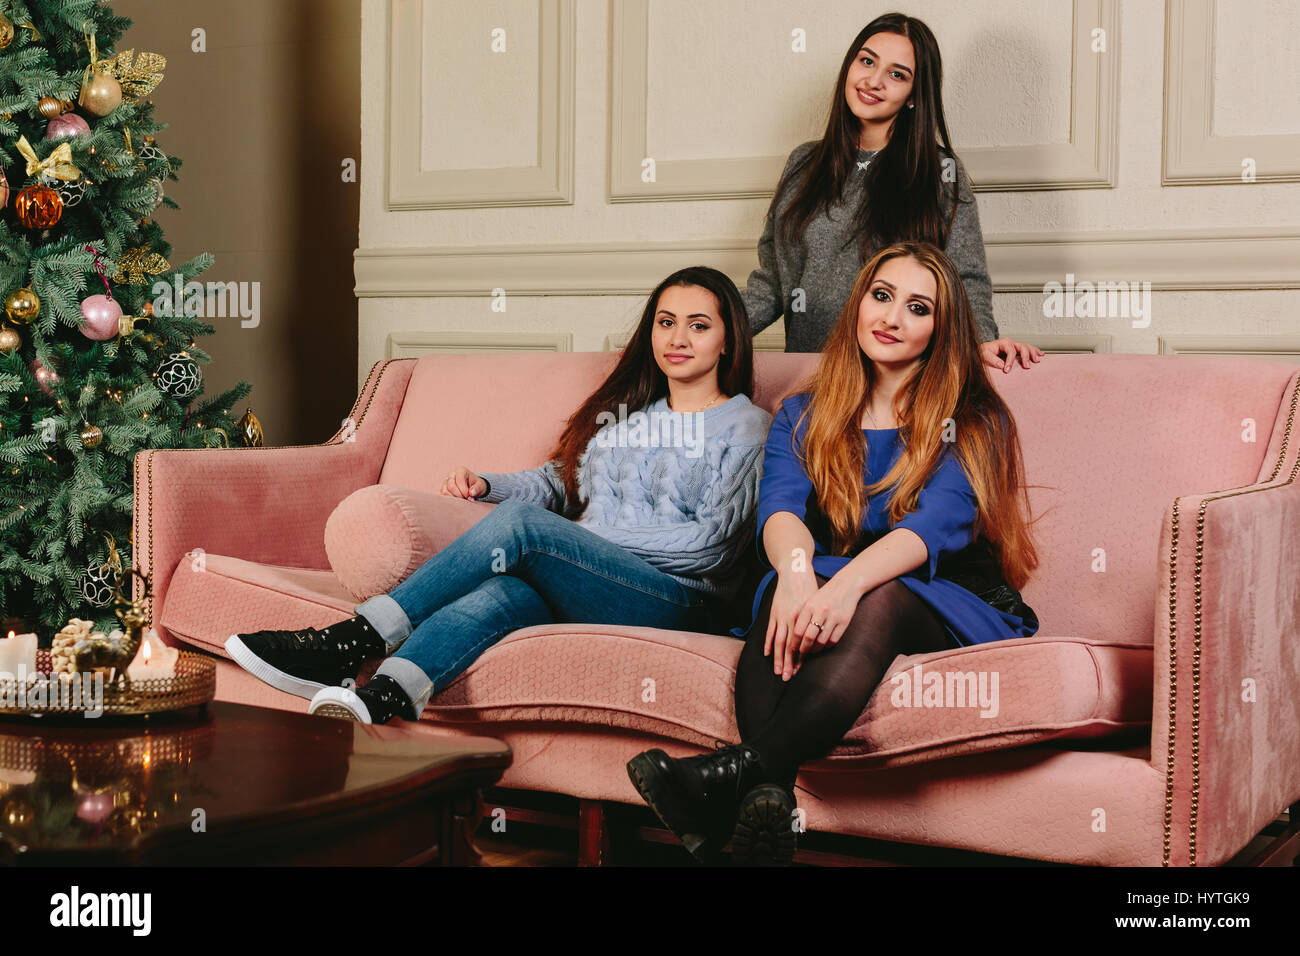 Three beautiful young girlfriends on a sofa near the Christmas tree. Studio horizontal portrait. Stock Photo